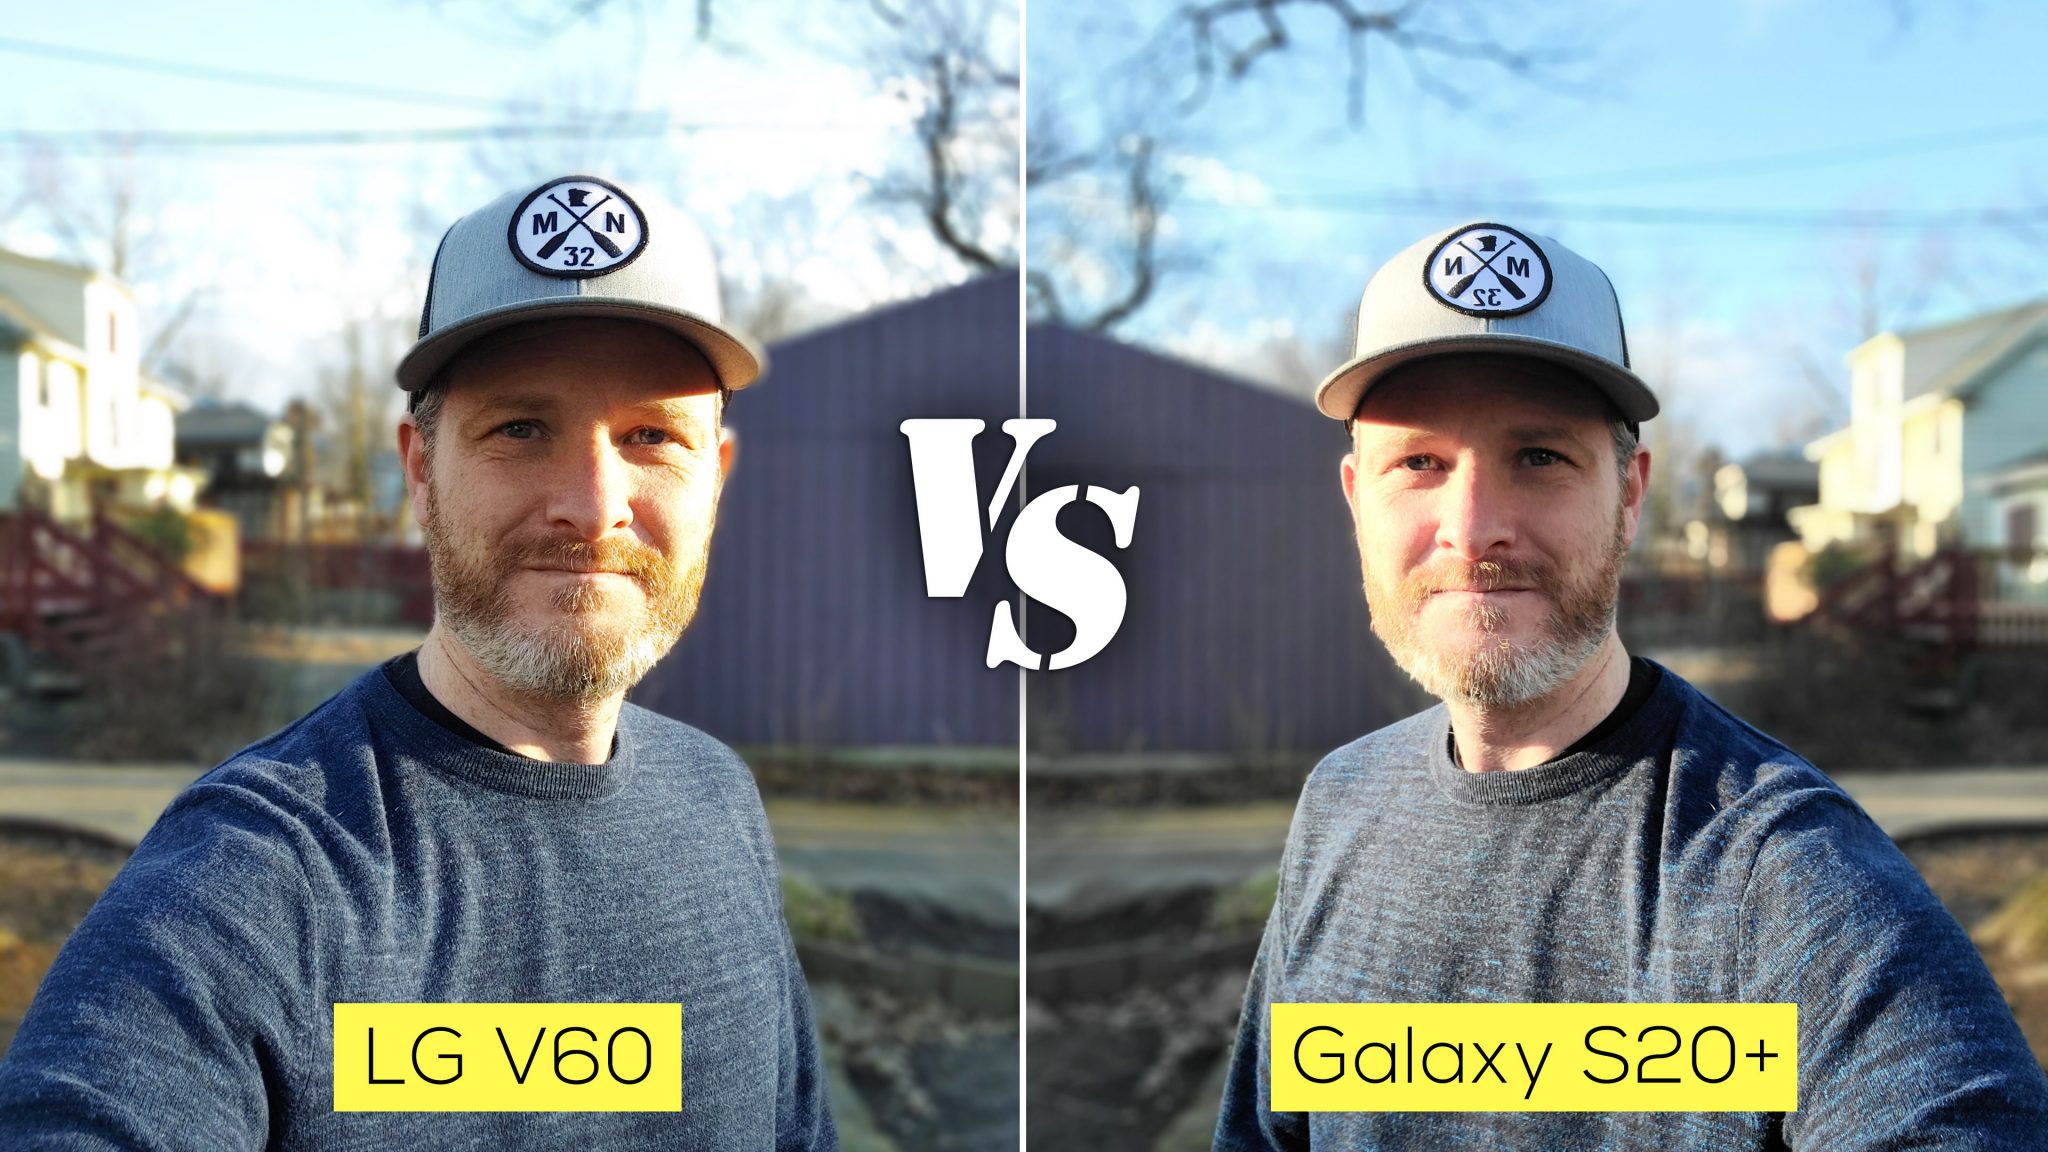 LG V60 versus Samsung Galaxy S20+ selfie camera comparison